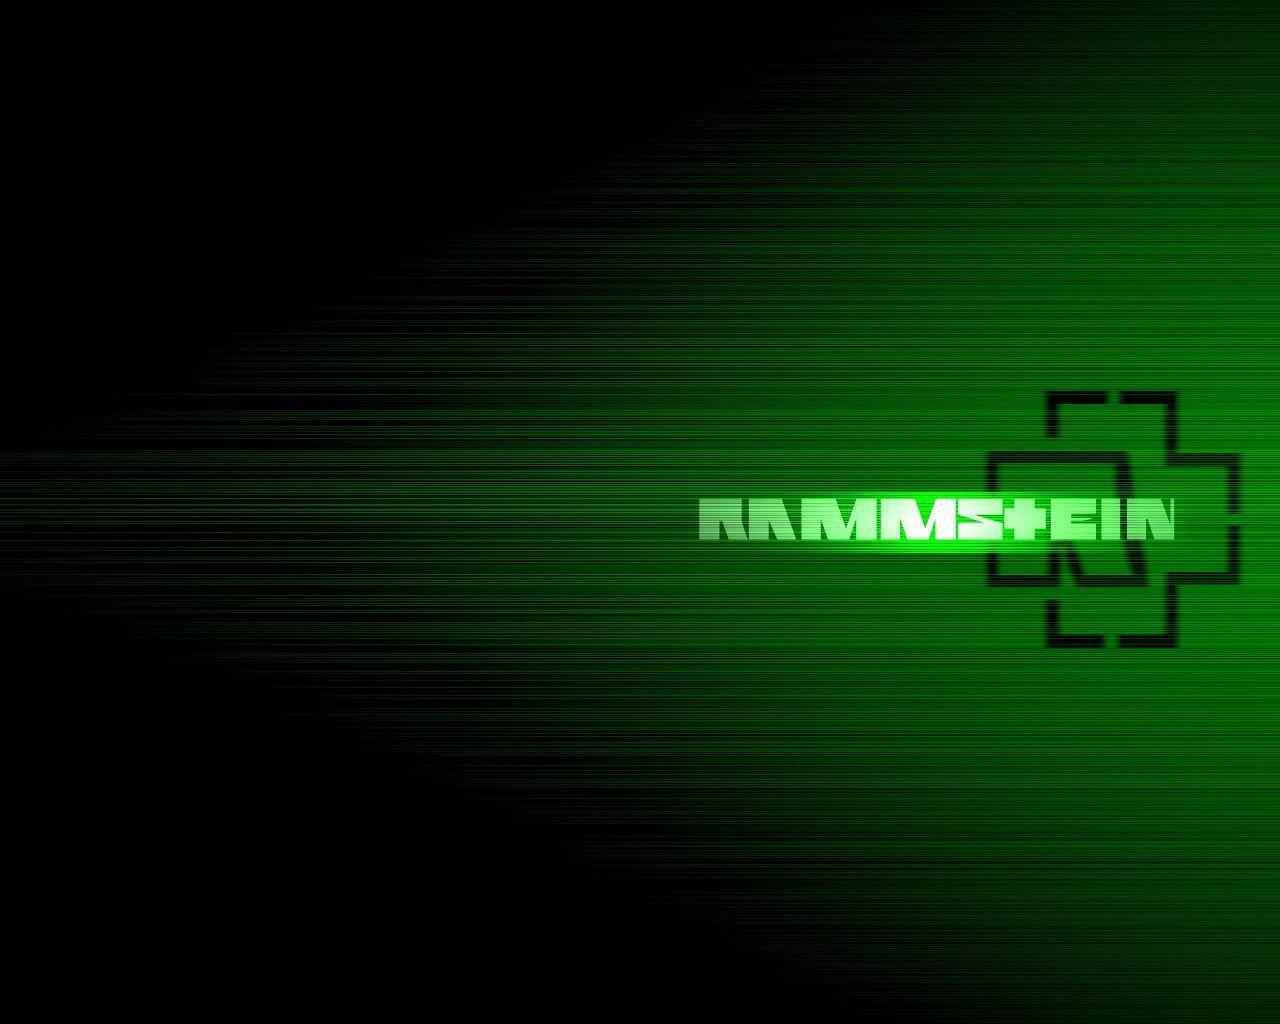 Rammstein Computer Wallpaper, Desktop Background 1280x1024 Id: 5082